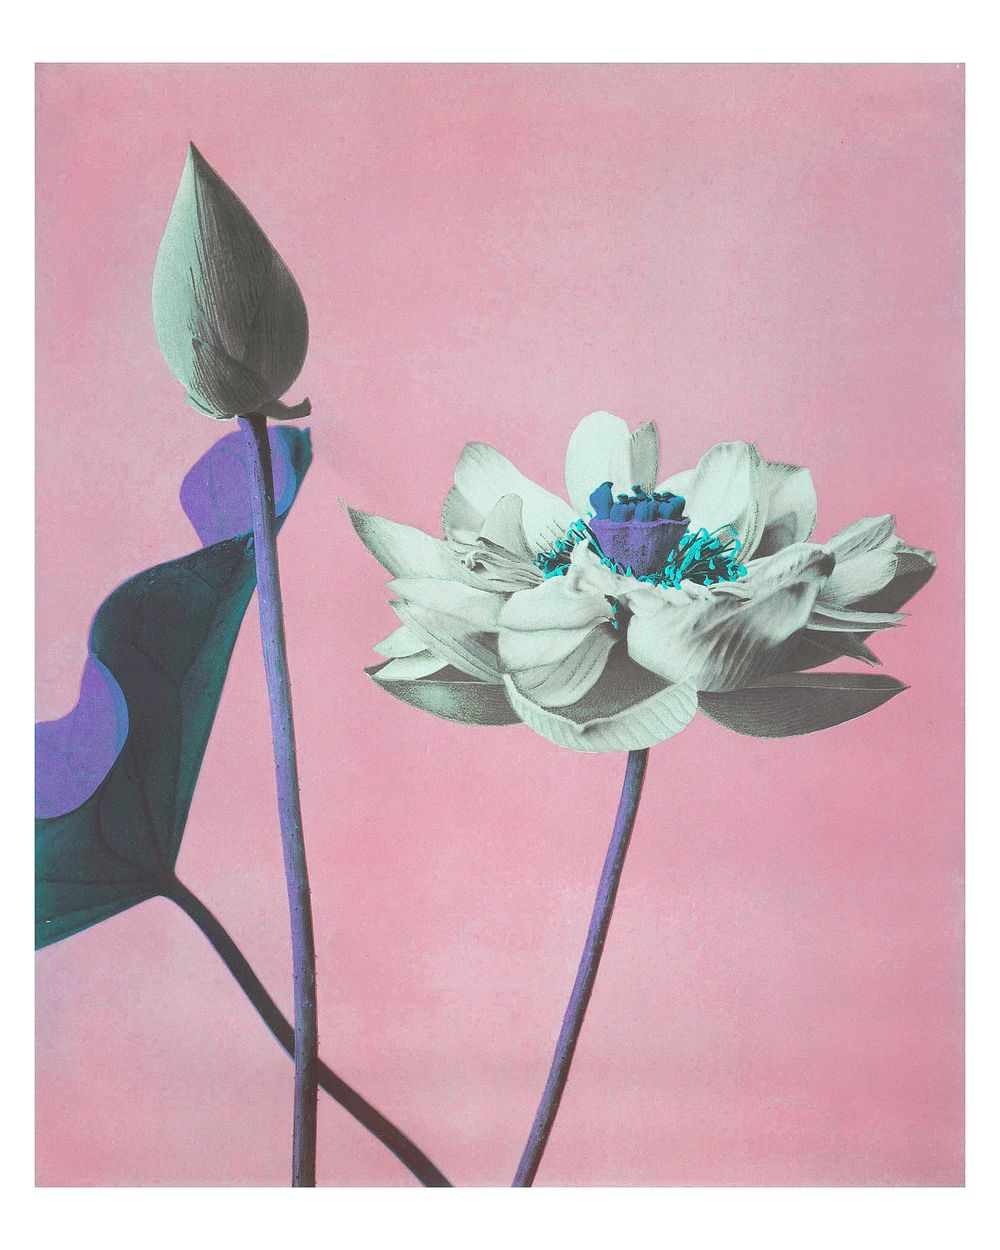 Pastel lotus flowers artwork vintage wall art print and poster design remix from original photography by Ogawa Kazumasa.